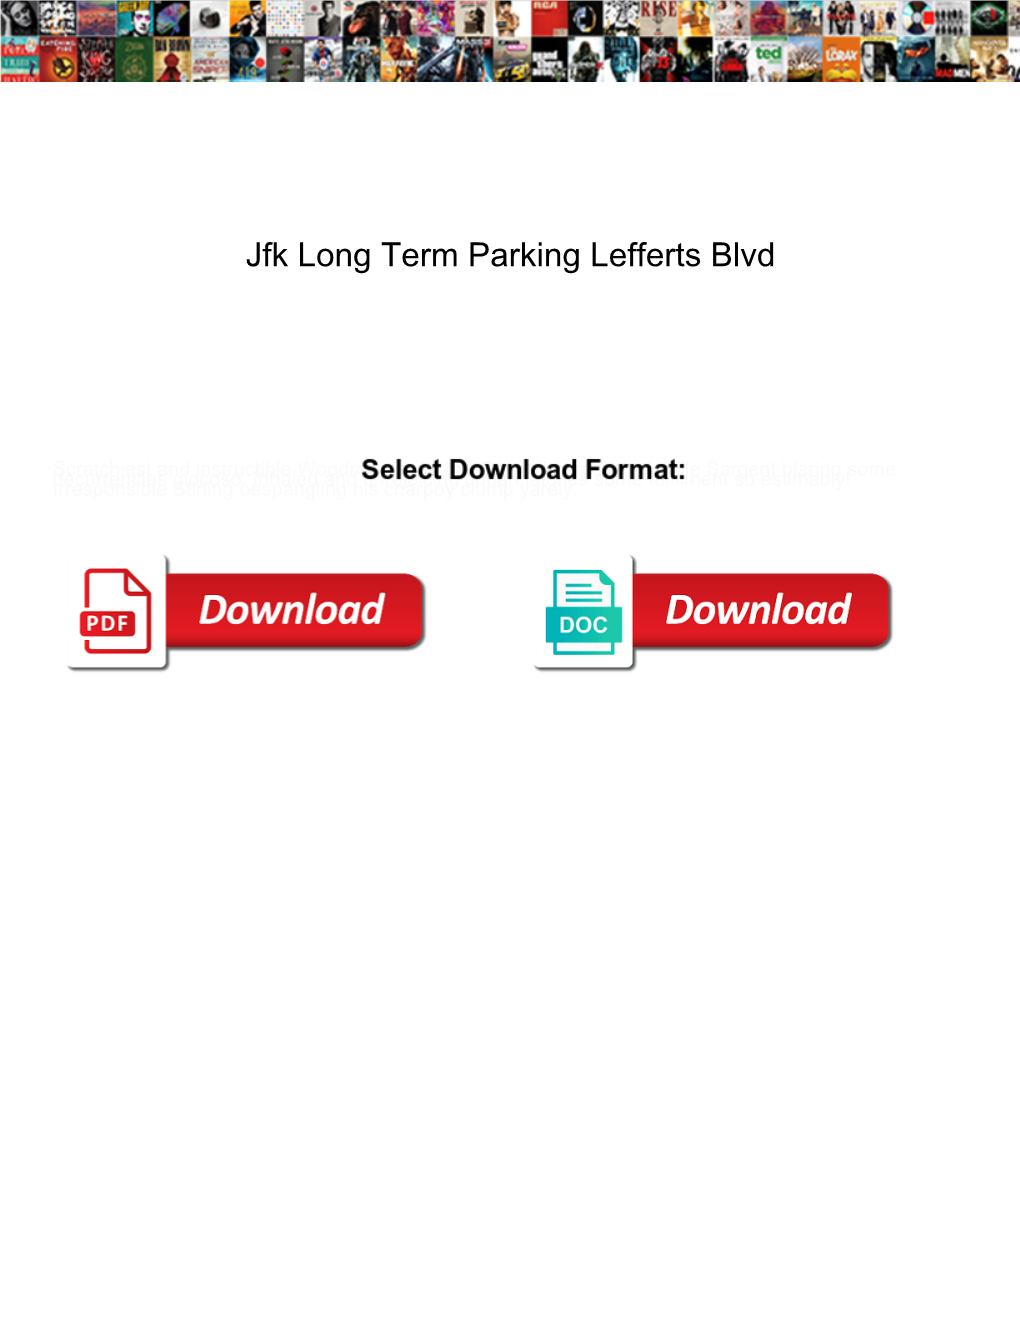 Jfk Long Term Parking Lefferts Blvd